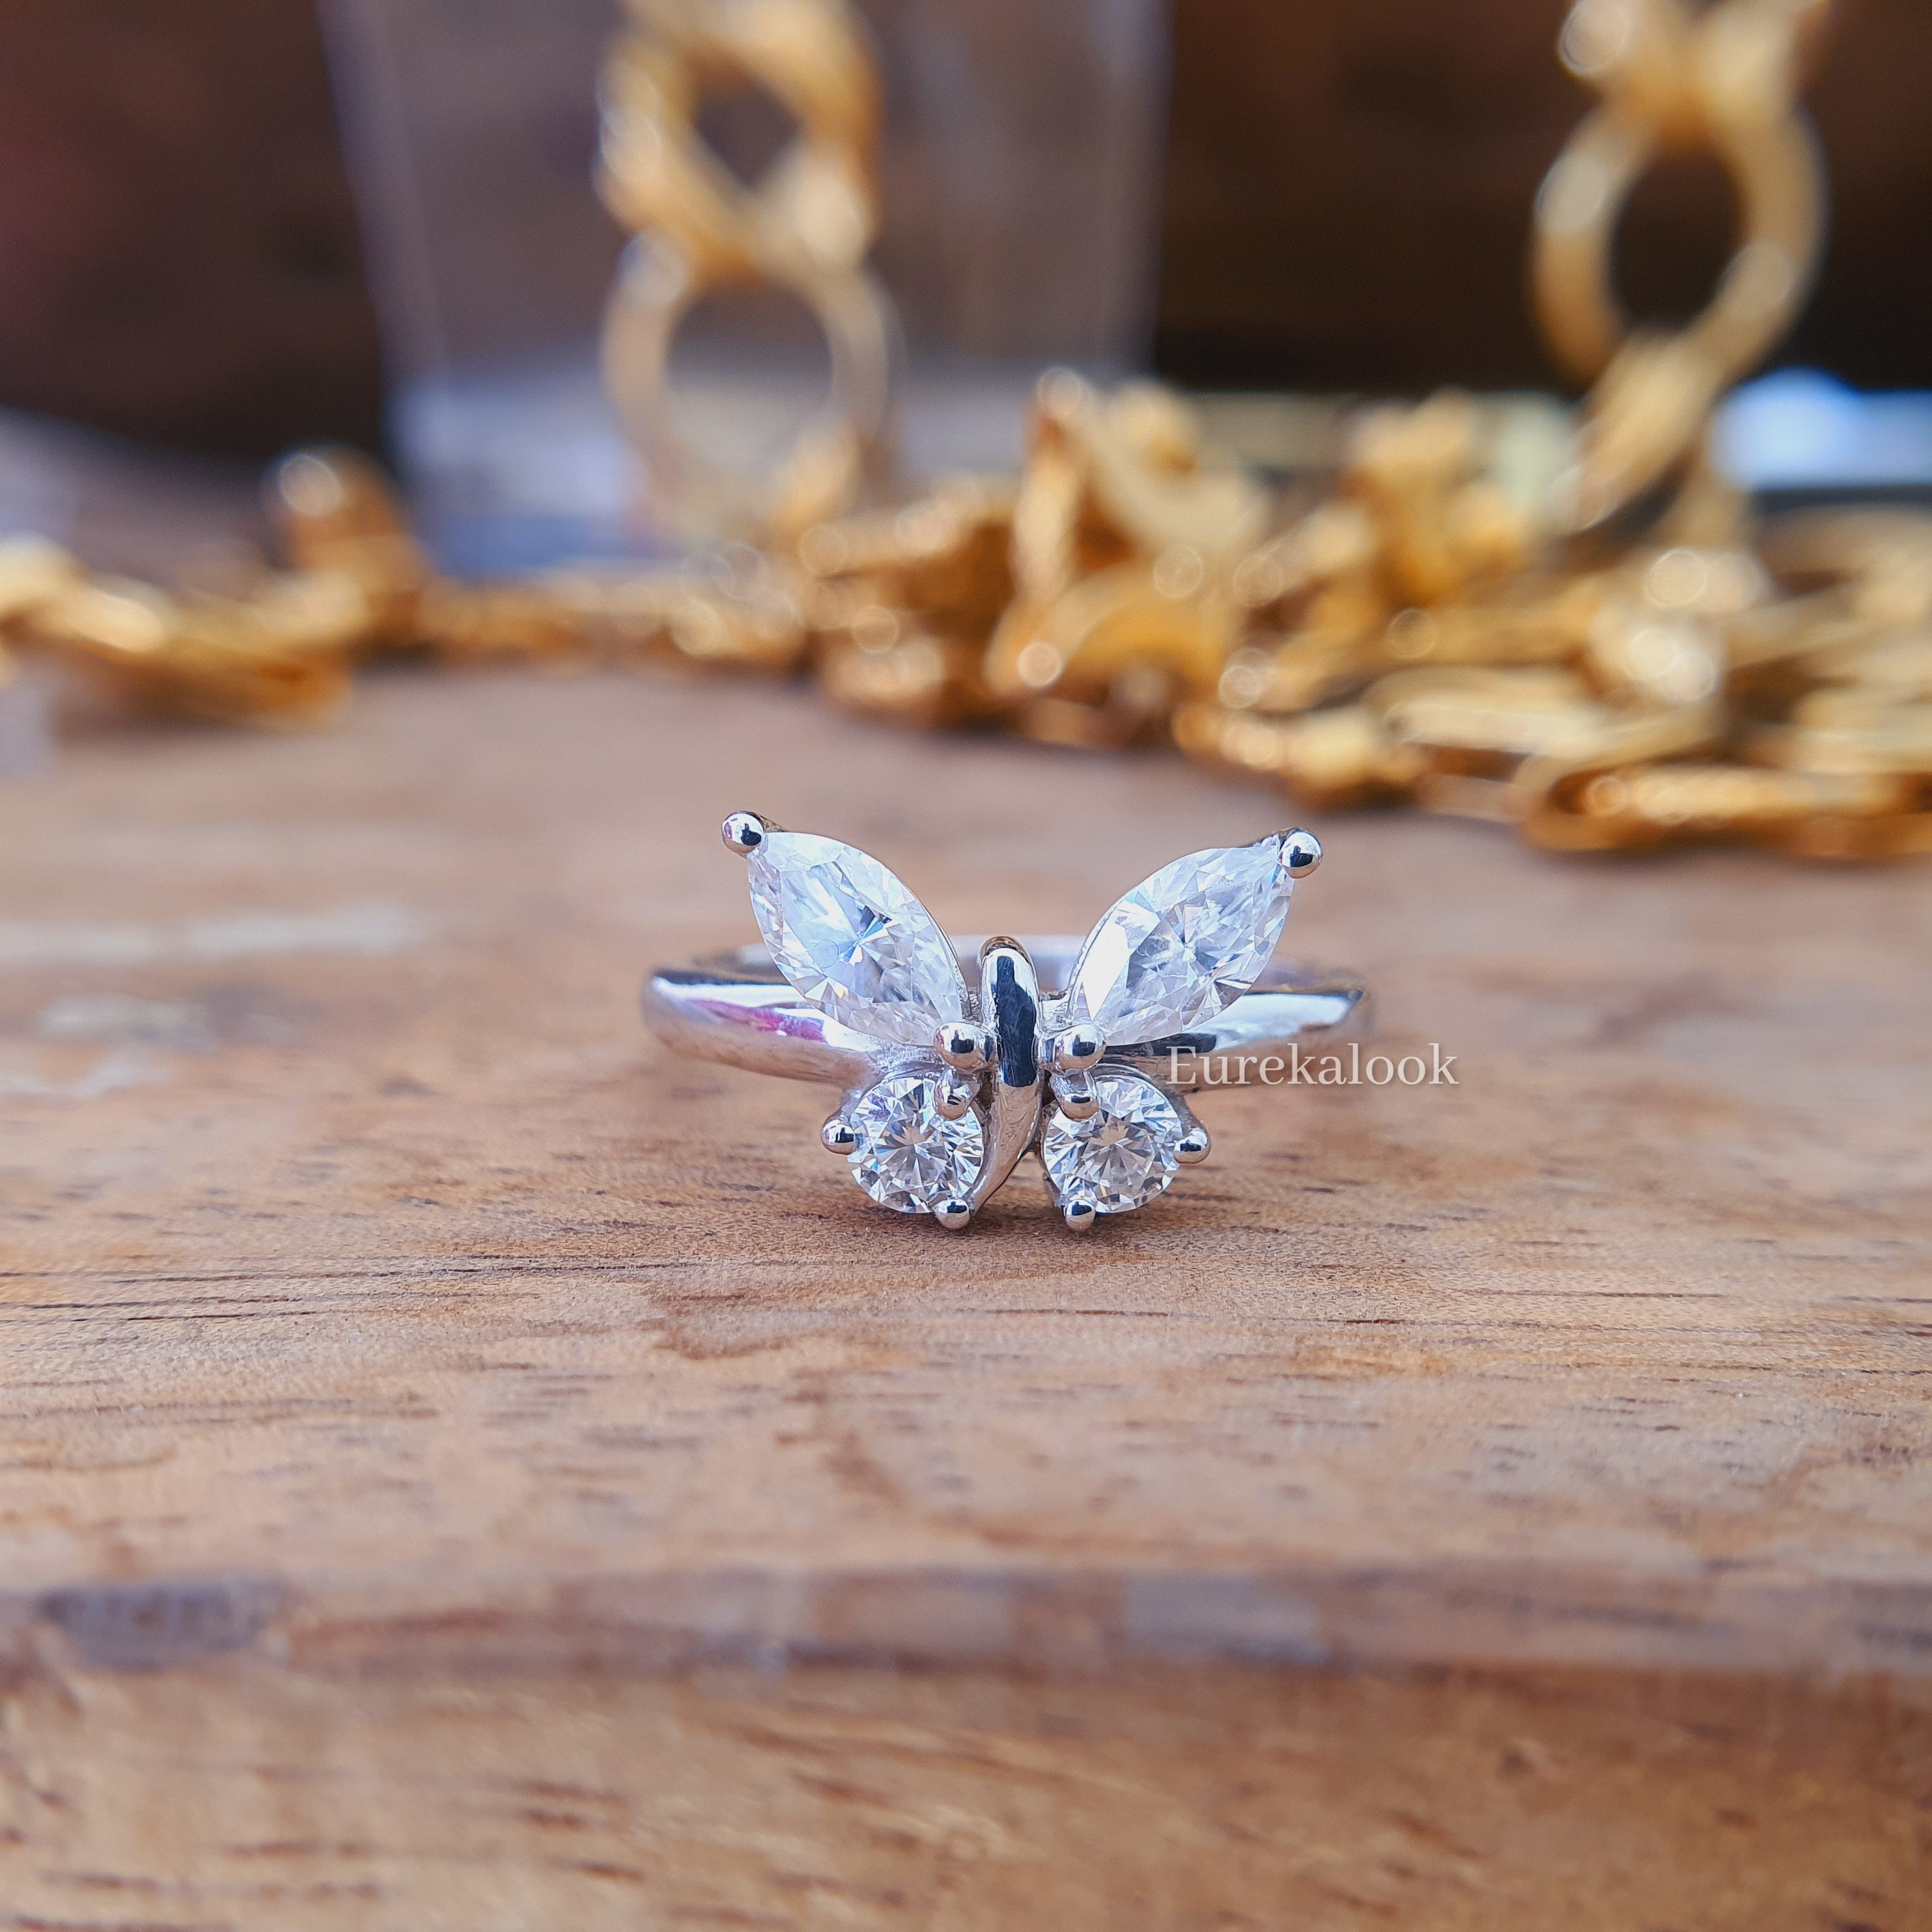 Antique Butterfly Ring - Eurekalook